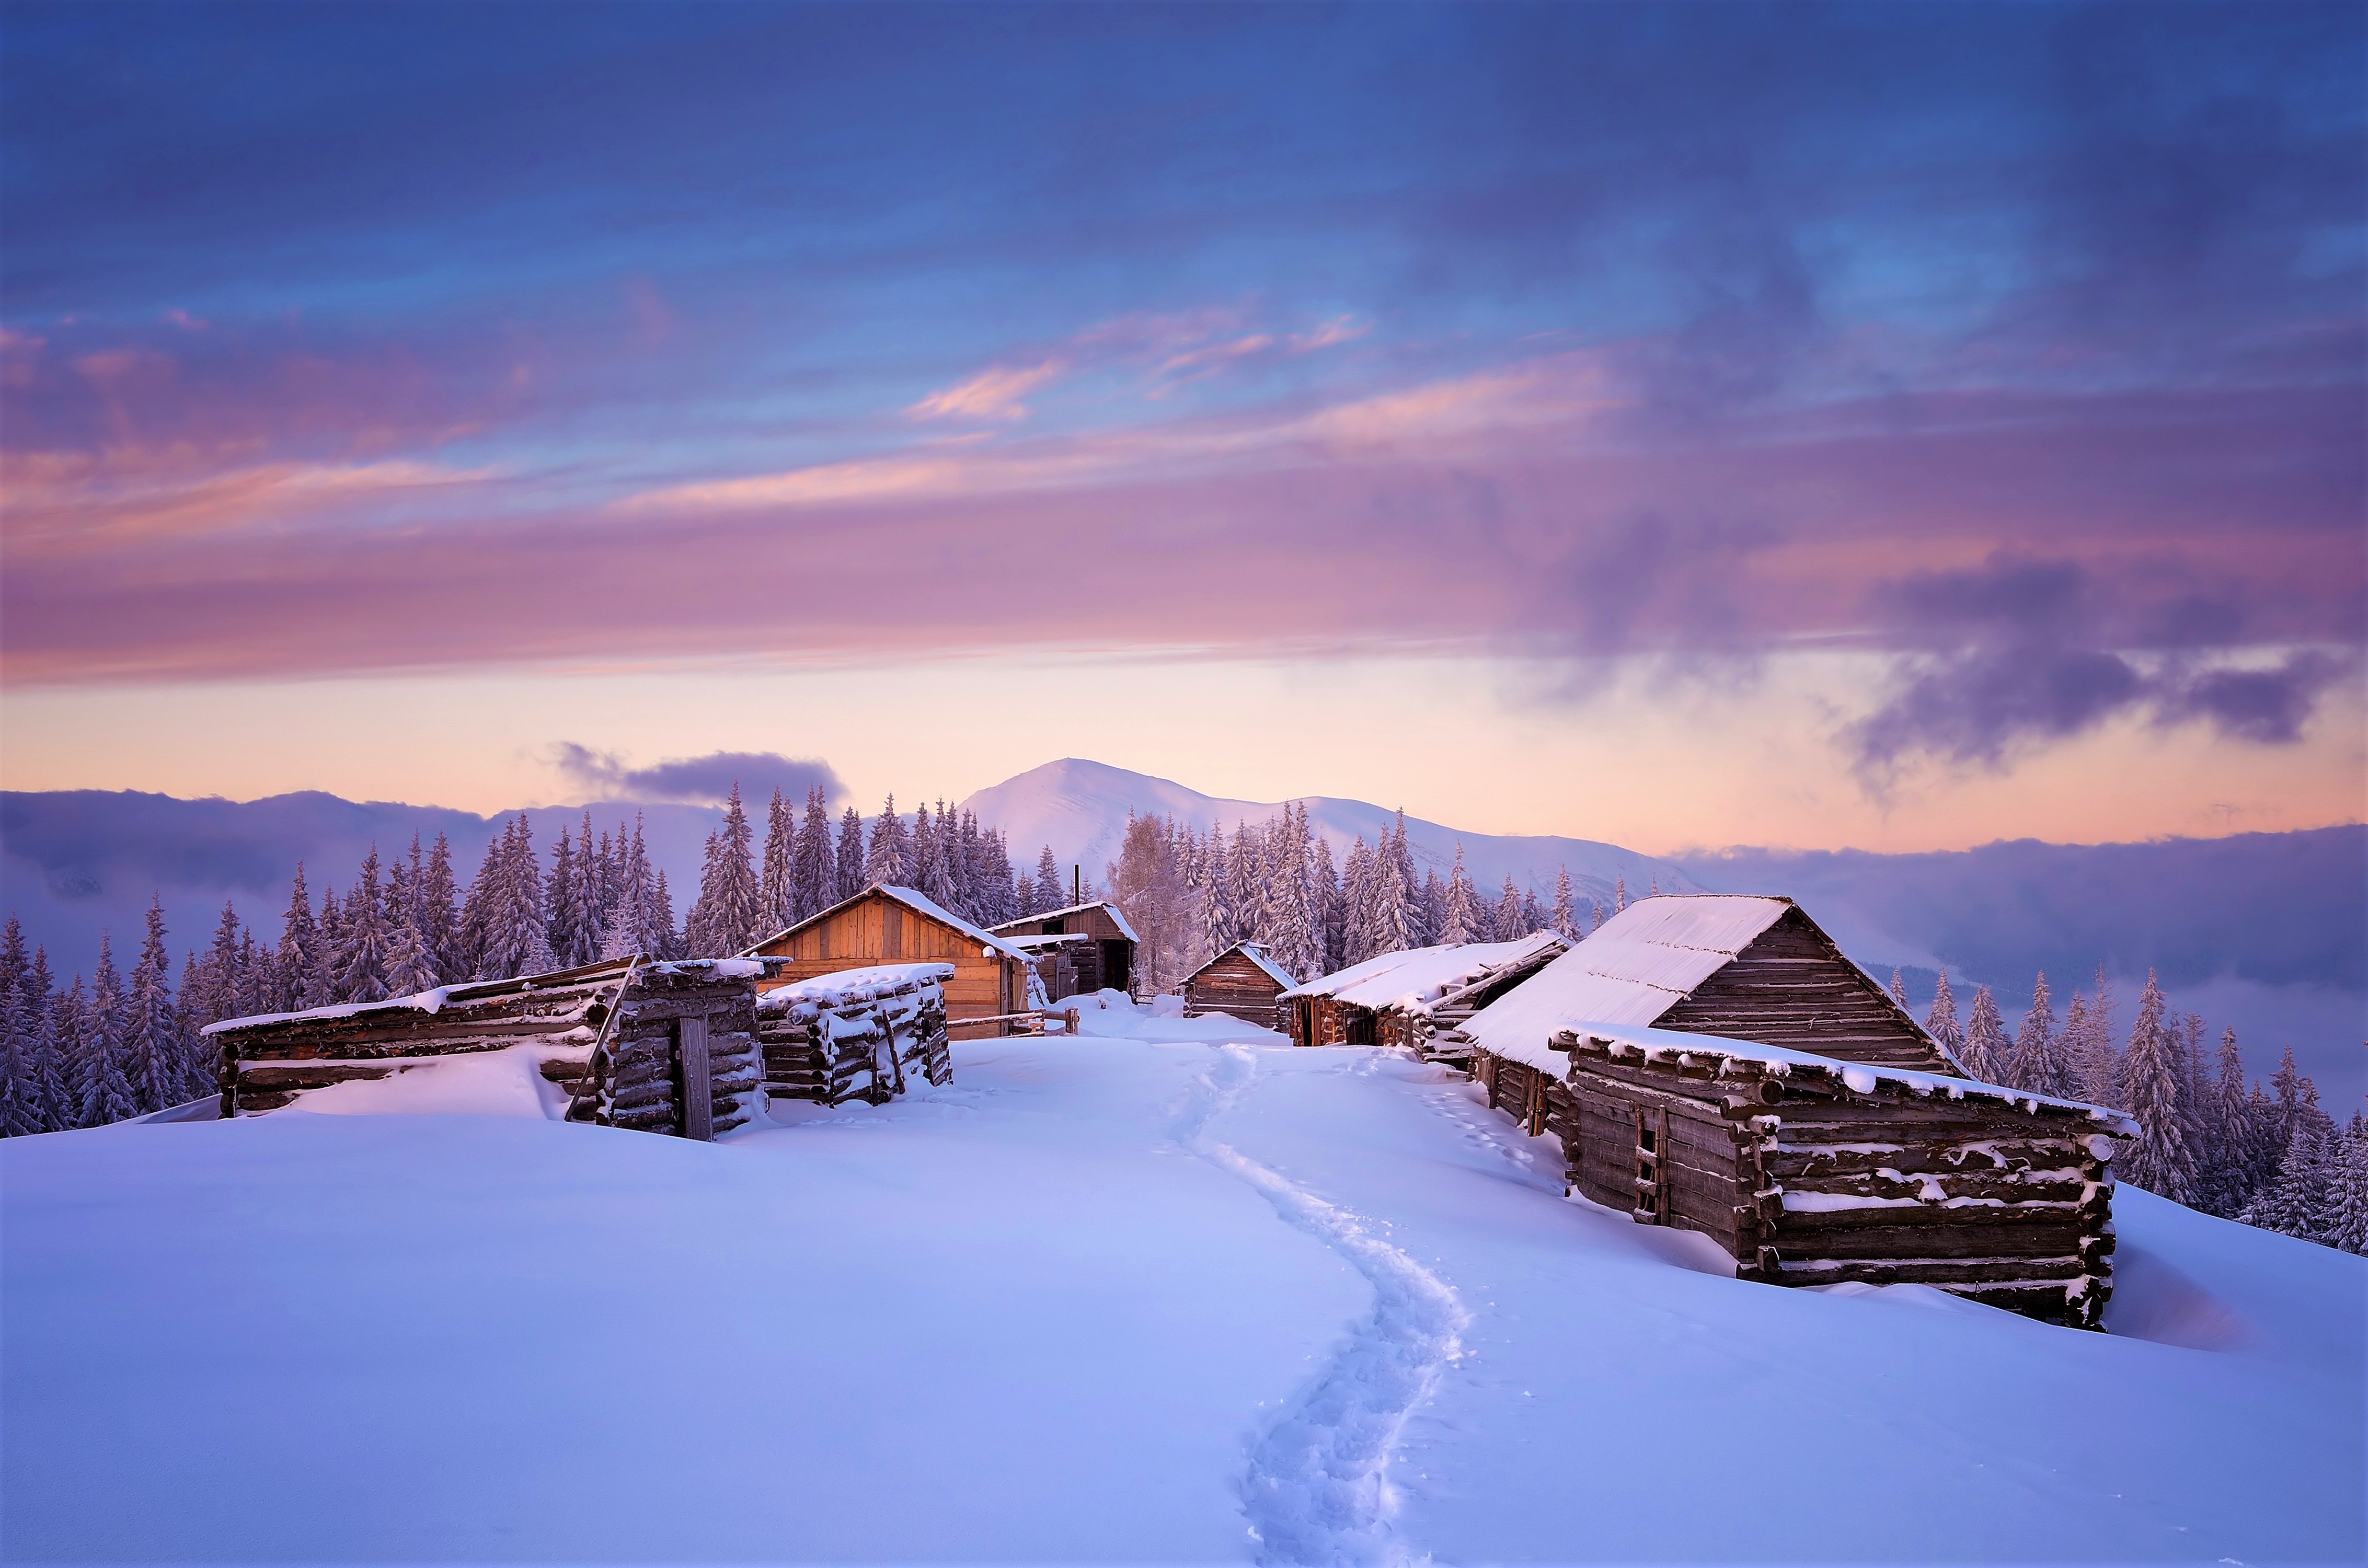 Cabins on Winter Mountain 4k Ultra HD Wallpaper. Background